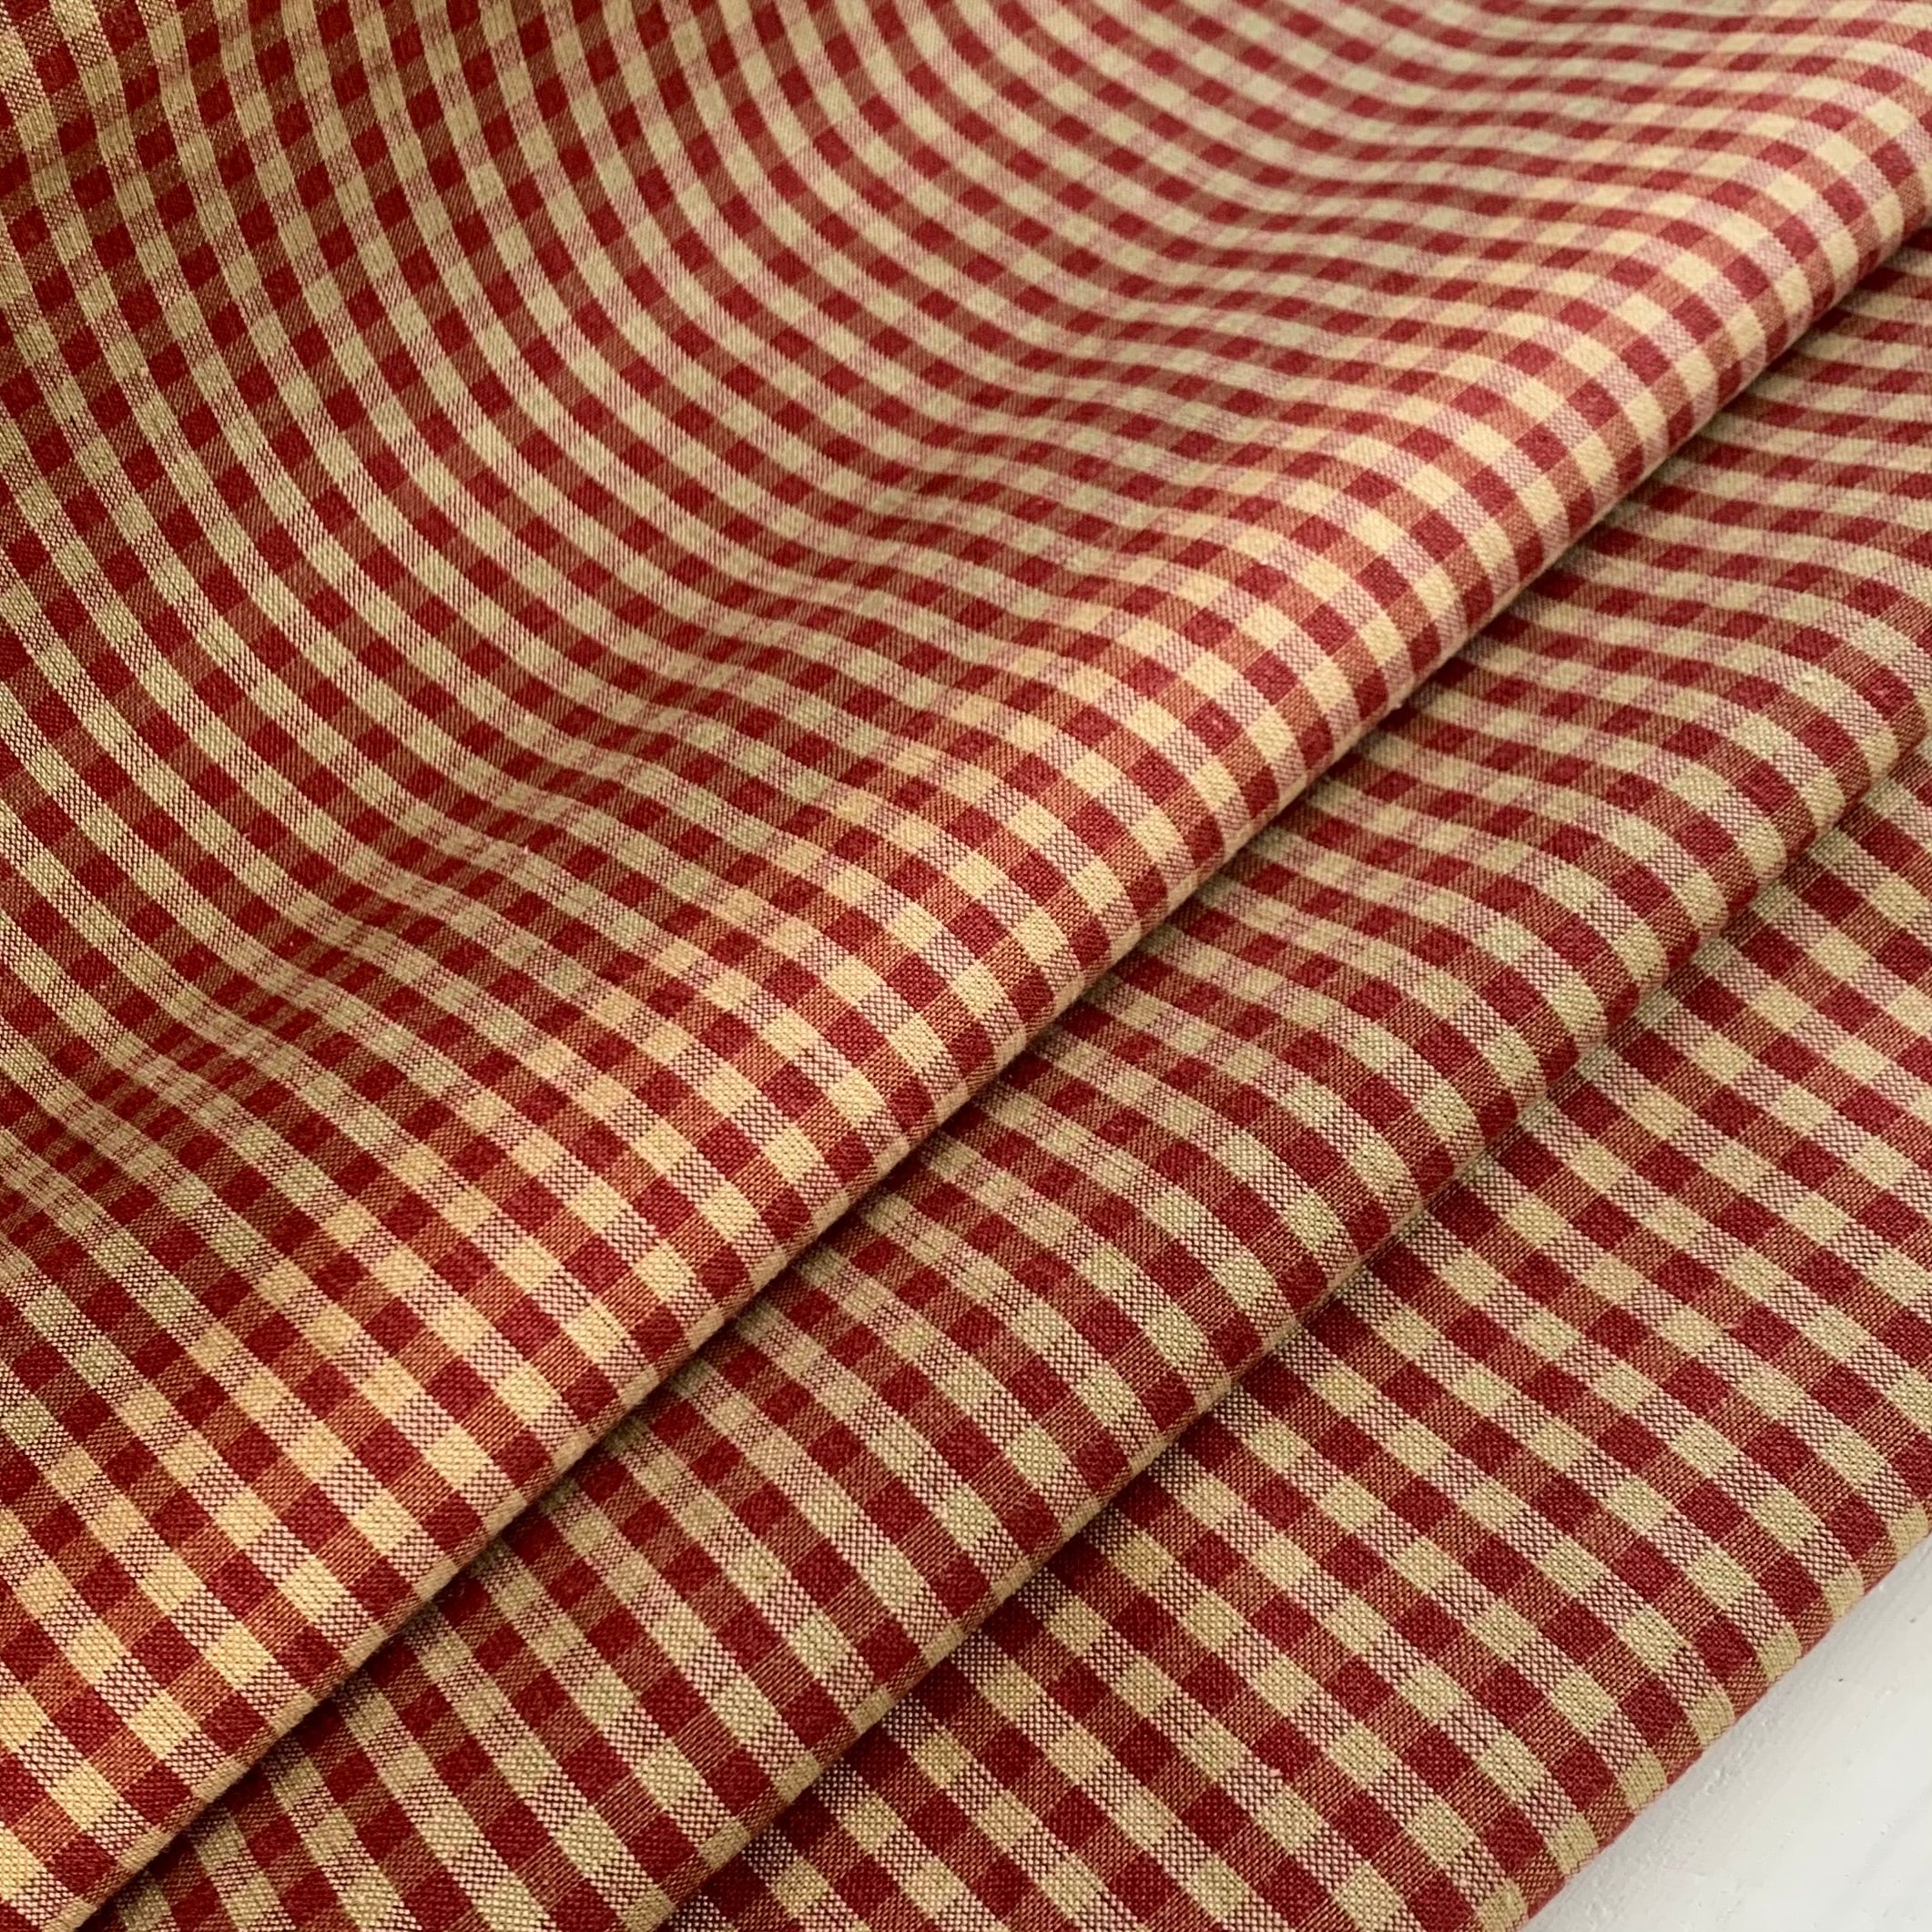 Red and Beige Mini Check Plaid - Homespun Fabric